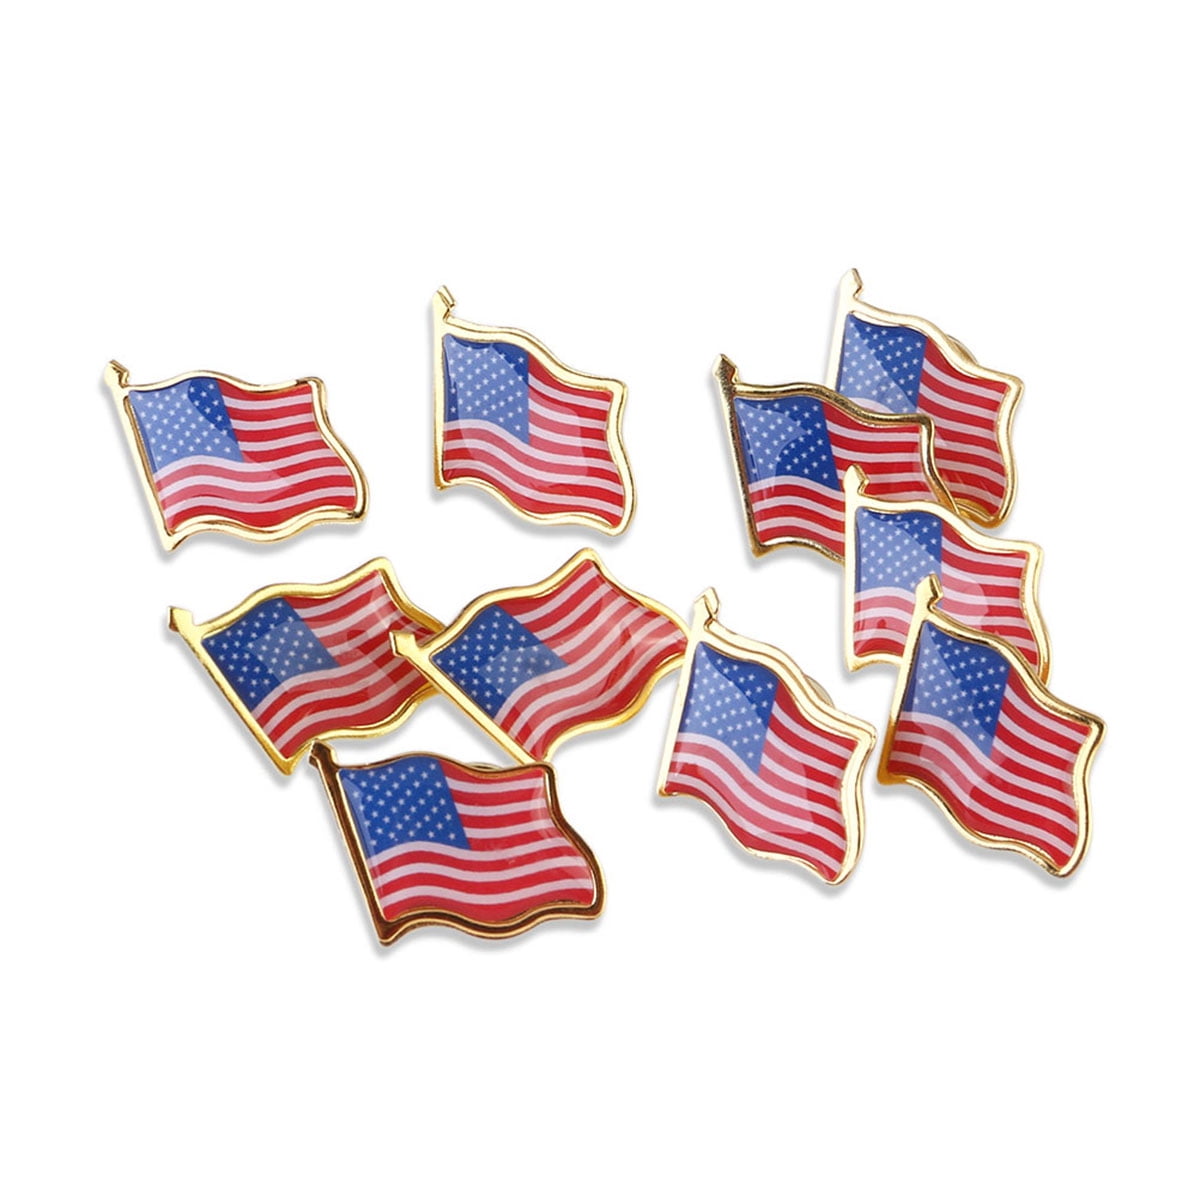 10 PCS x USA America Country Flag Lapel Hat Cap Tie Pin Badge Stars & Stripes 